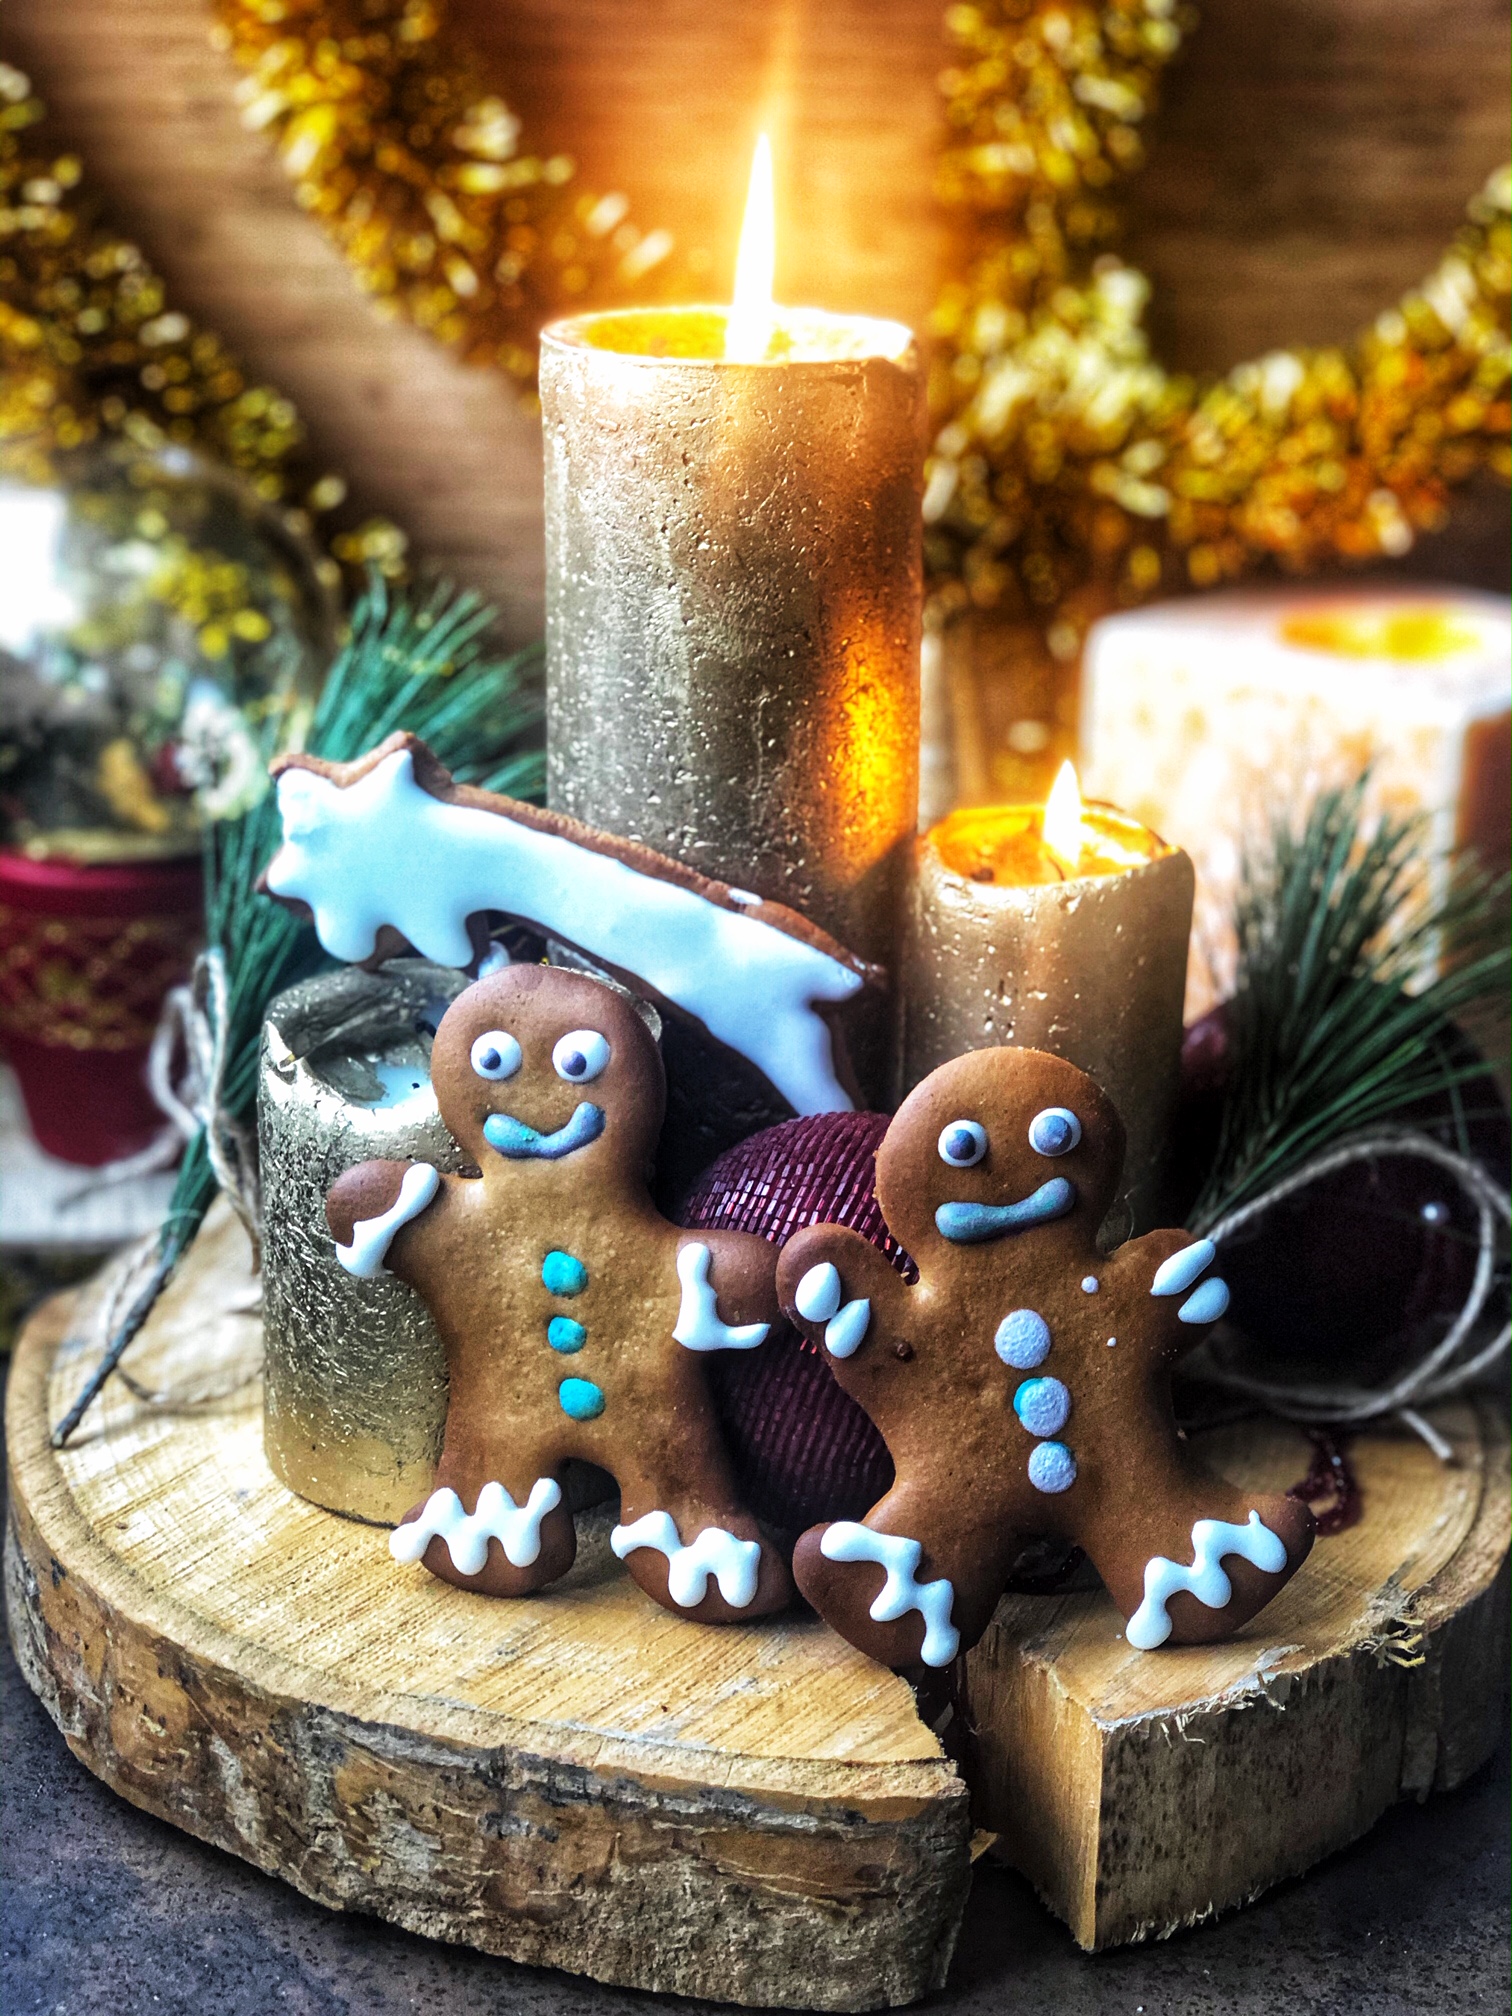 Taller de cocina solidario: galletas de jengibre navideñas